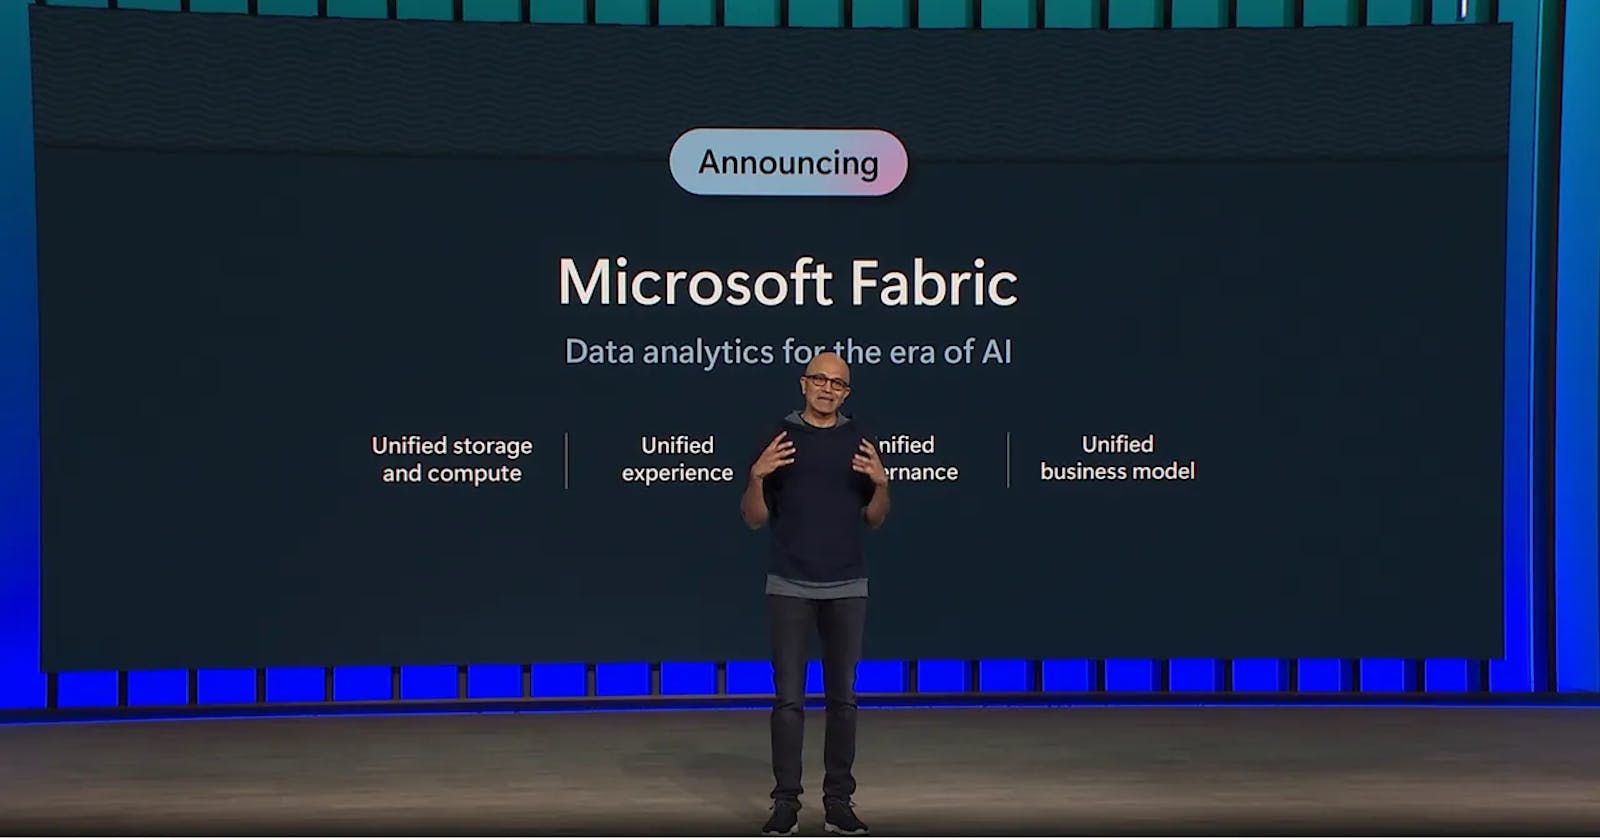 Microsoft Fabric: All Data Jobs in One Platform